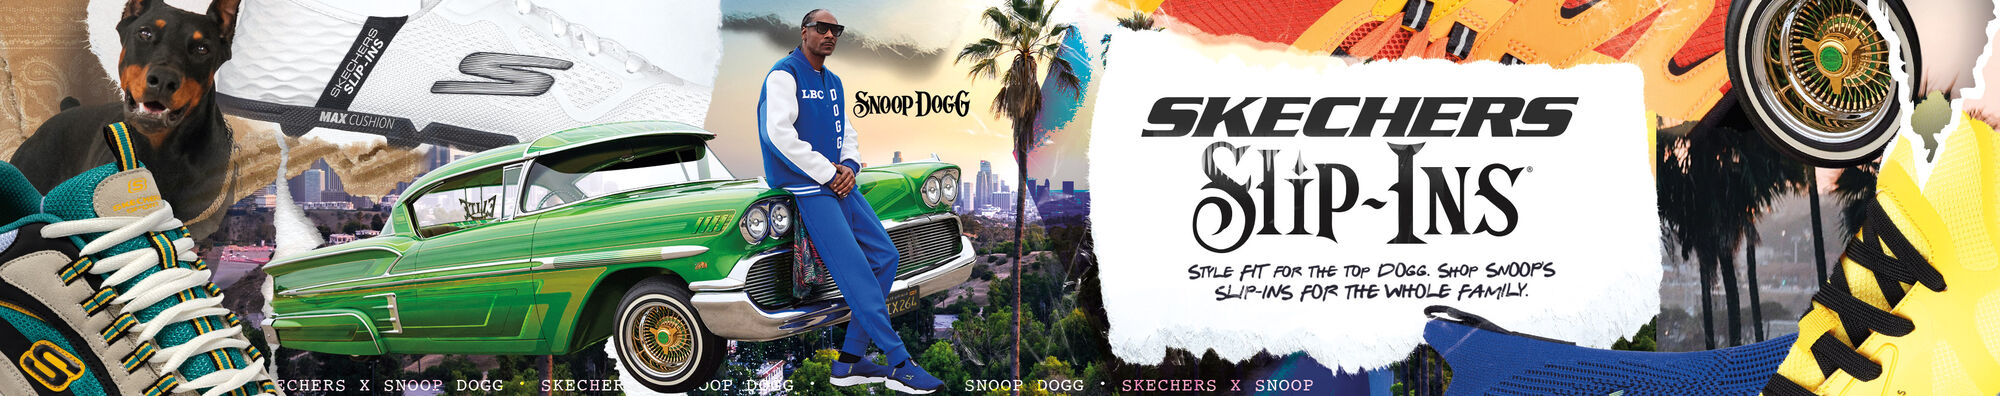 Snoop Dog Slip-ins